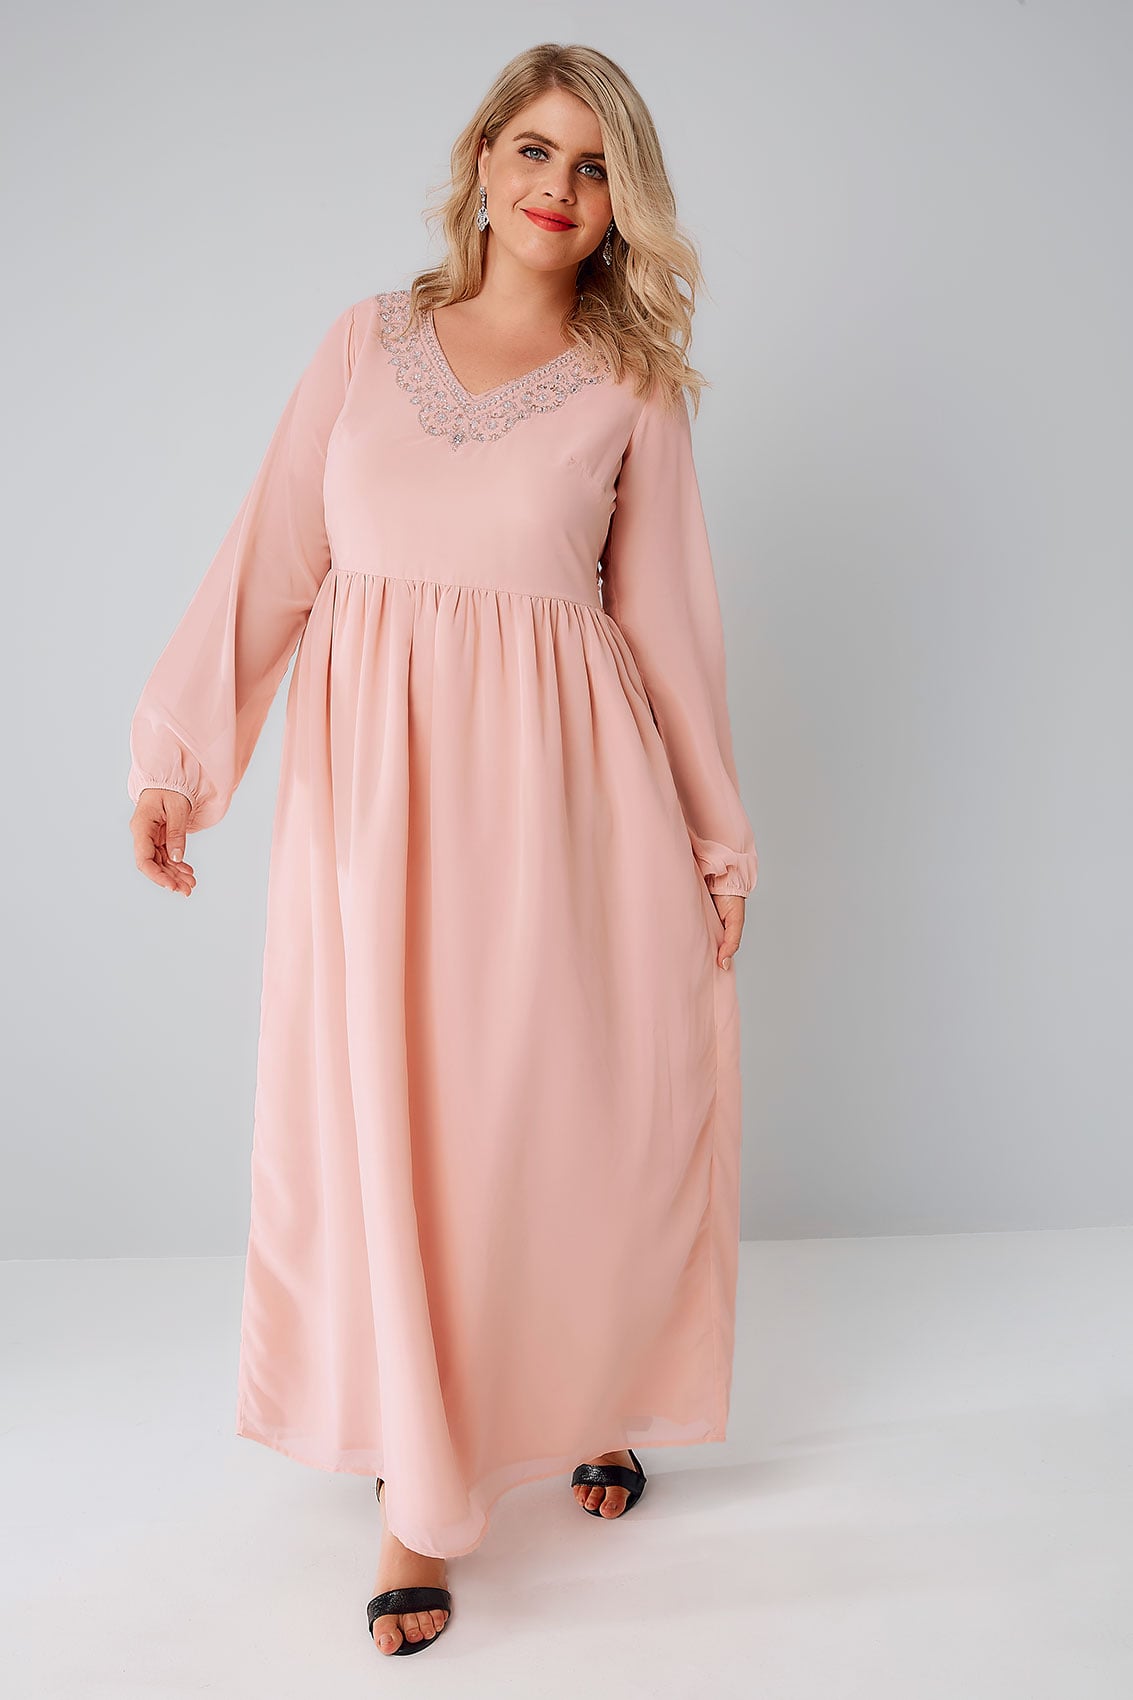 Blush Pink Chiffon Maxi Dress With Embellished V-Neckline, Plus size 16 ...